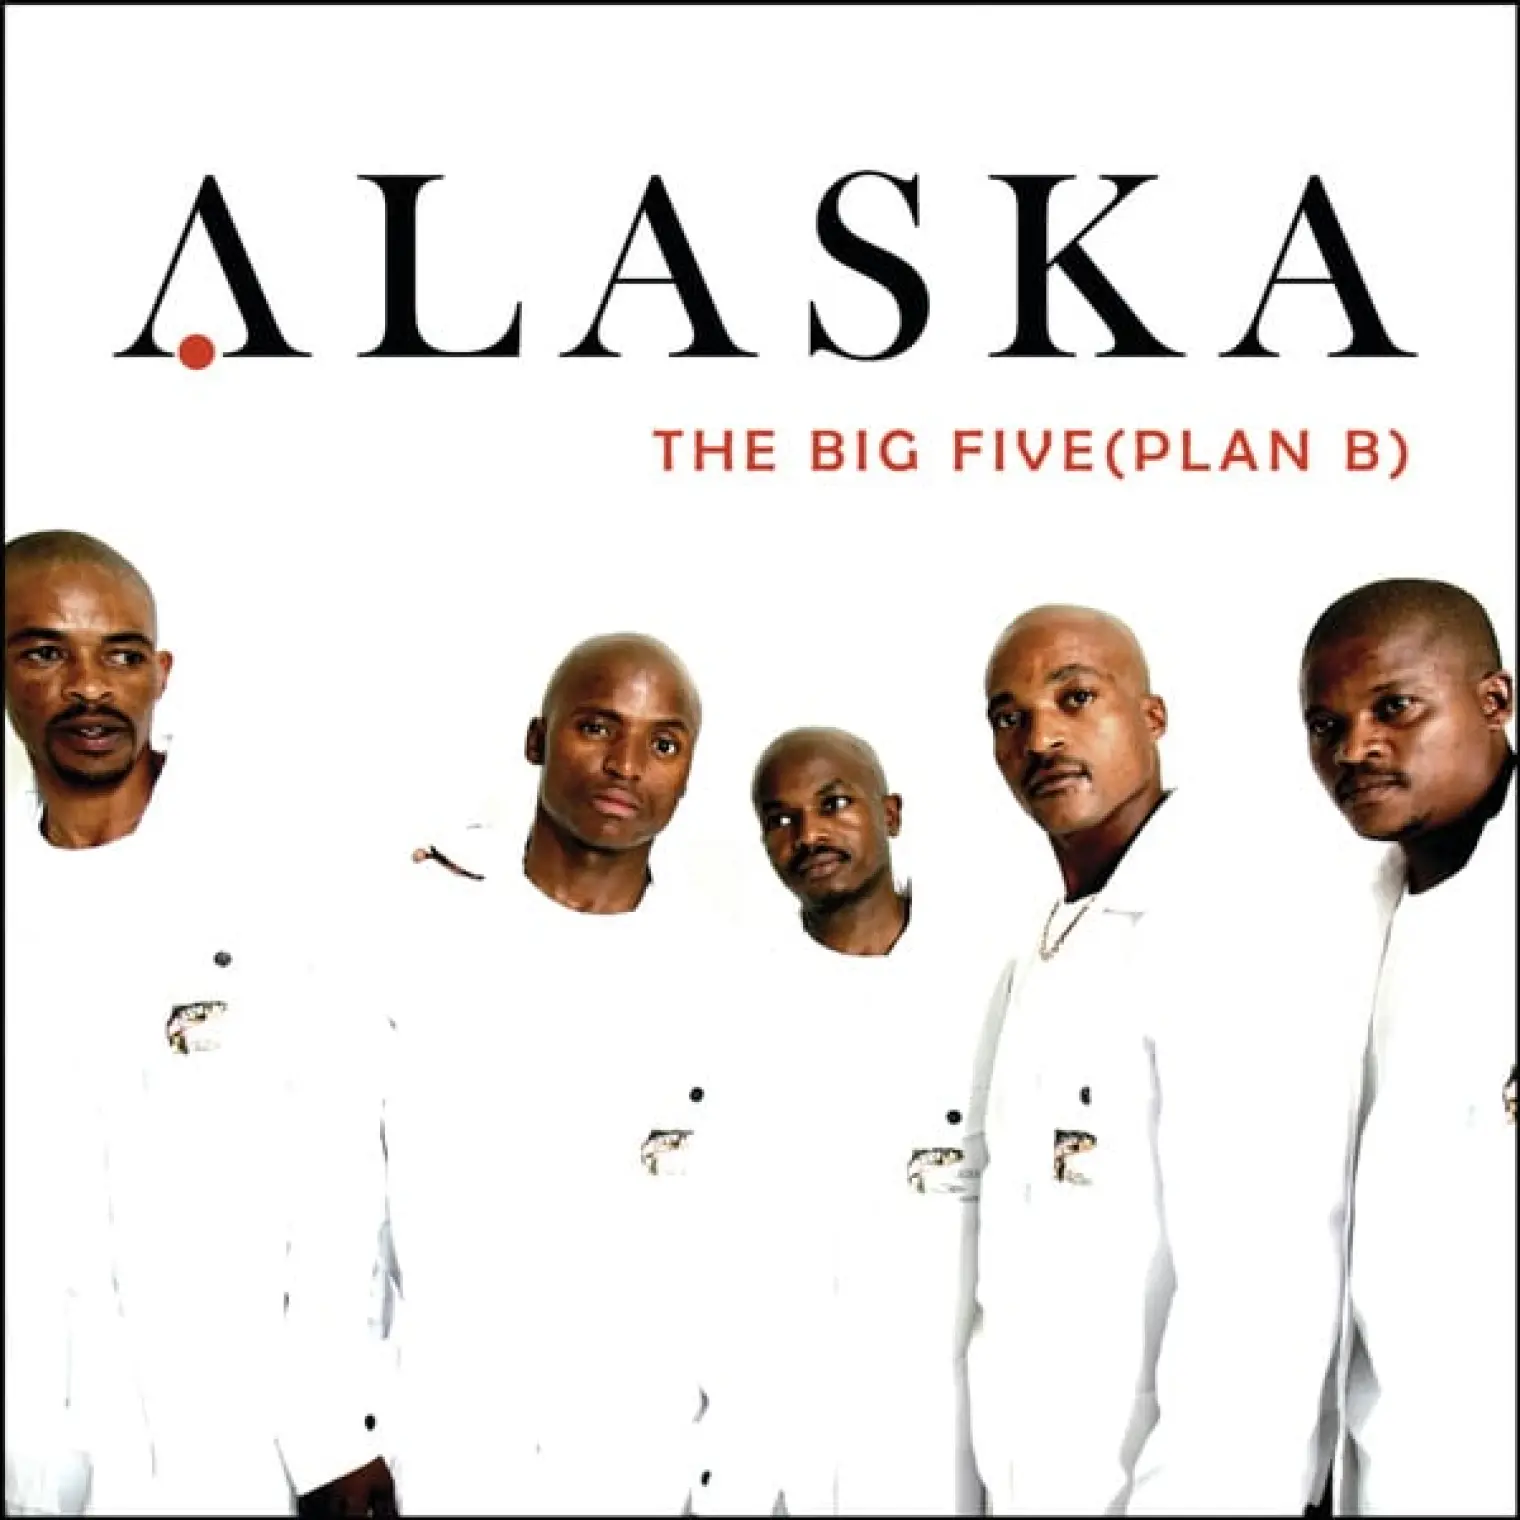 Big Five - Plan B -  Alaska 